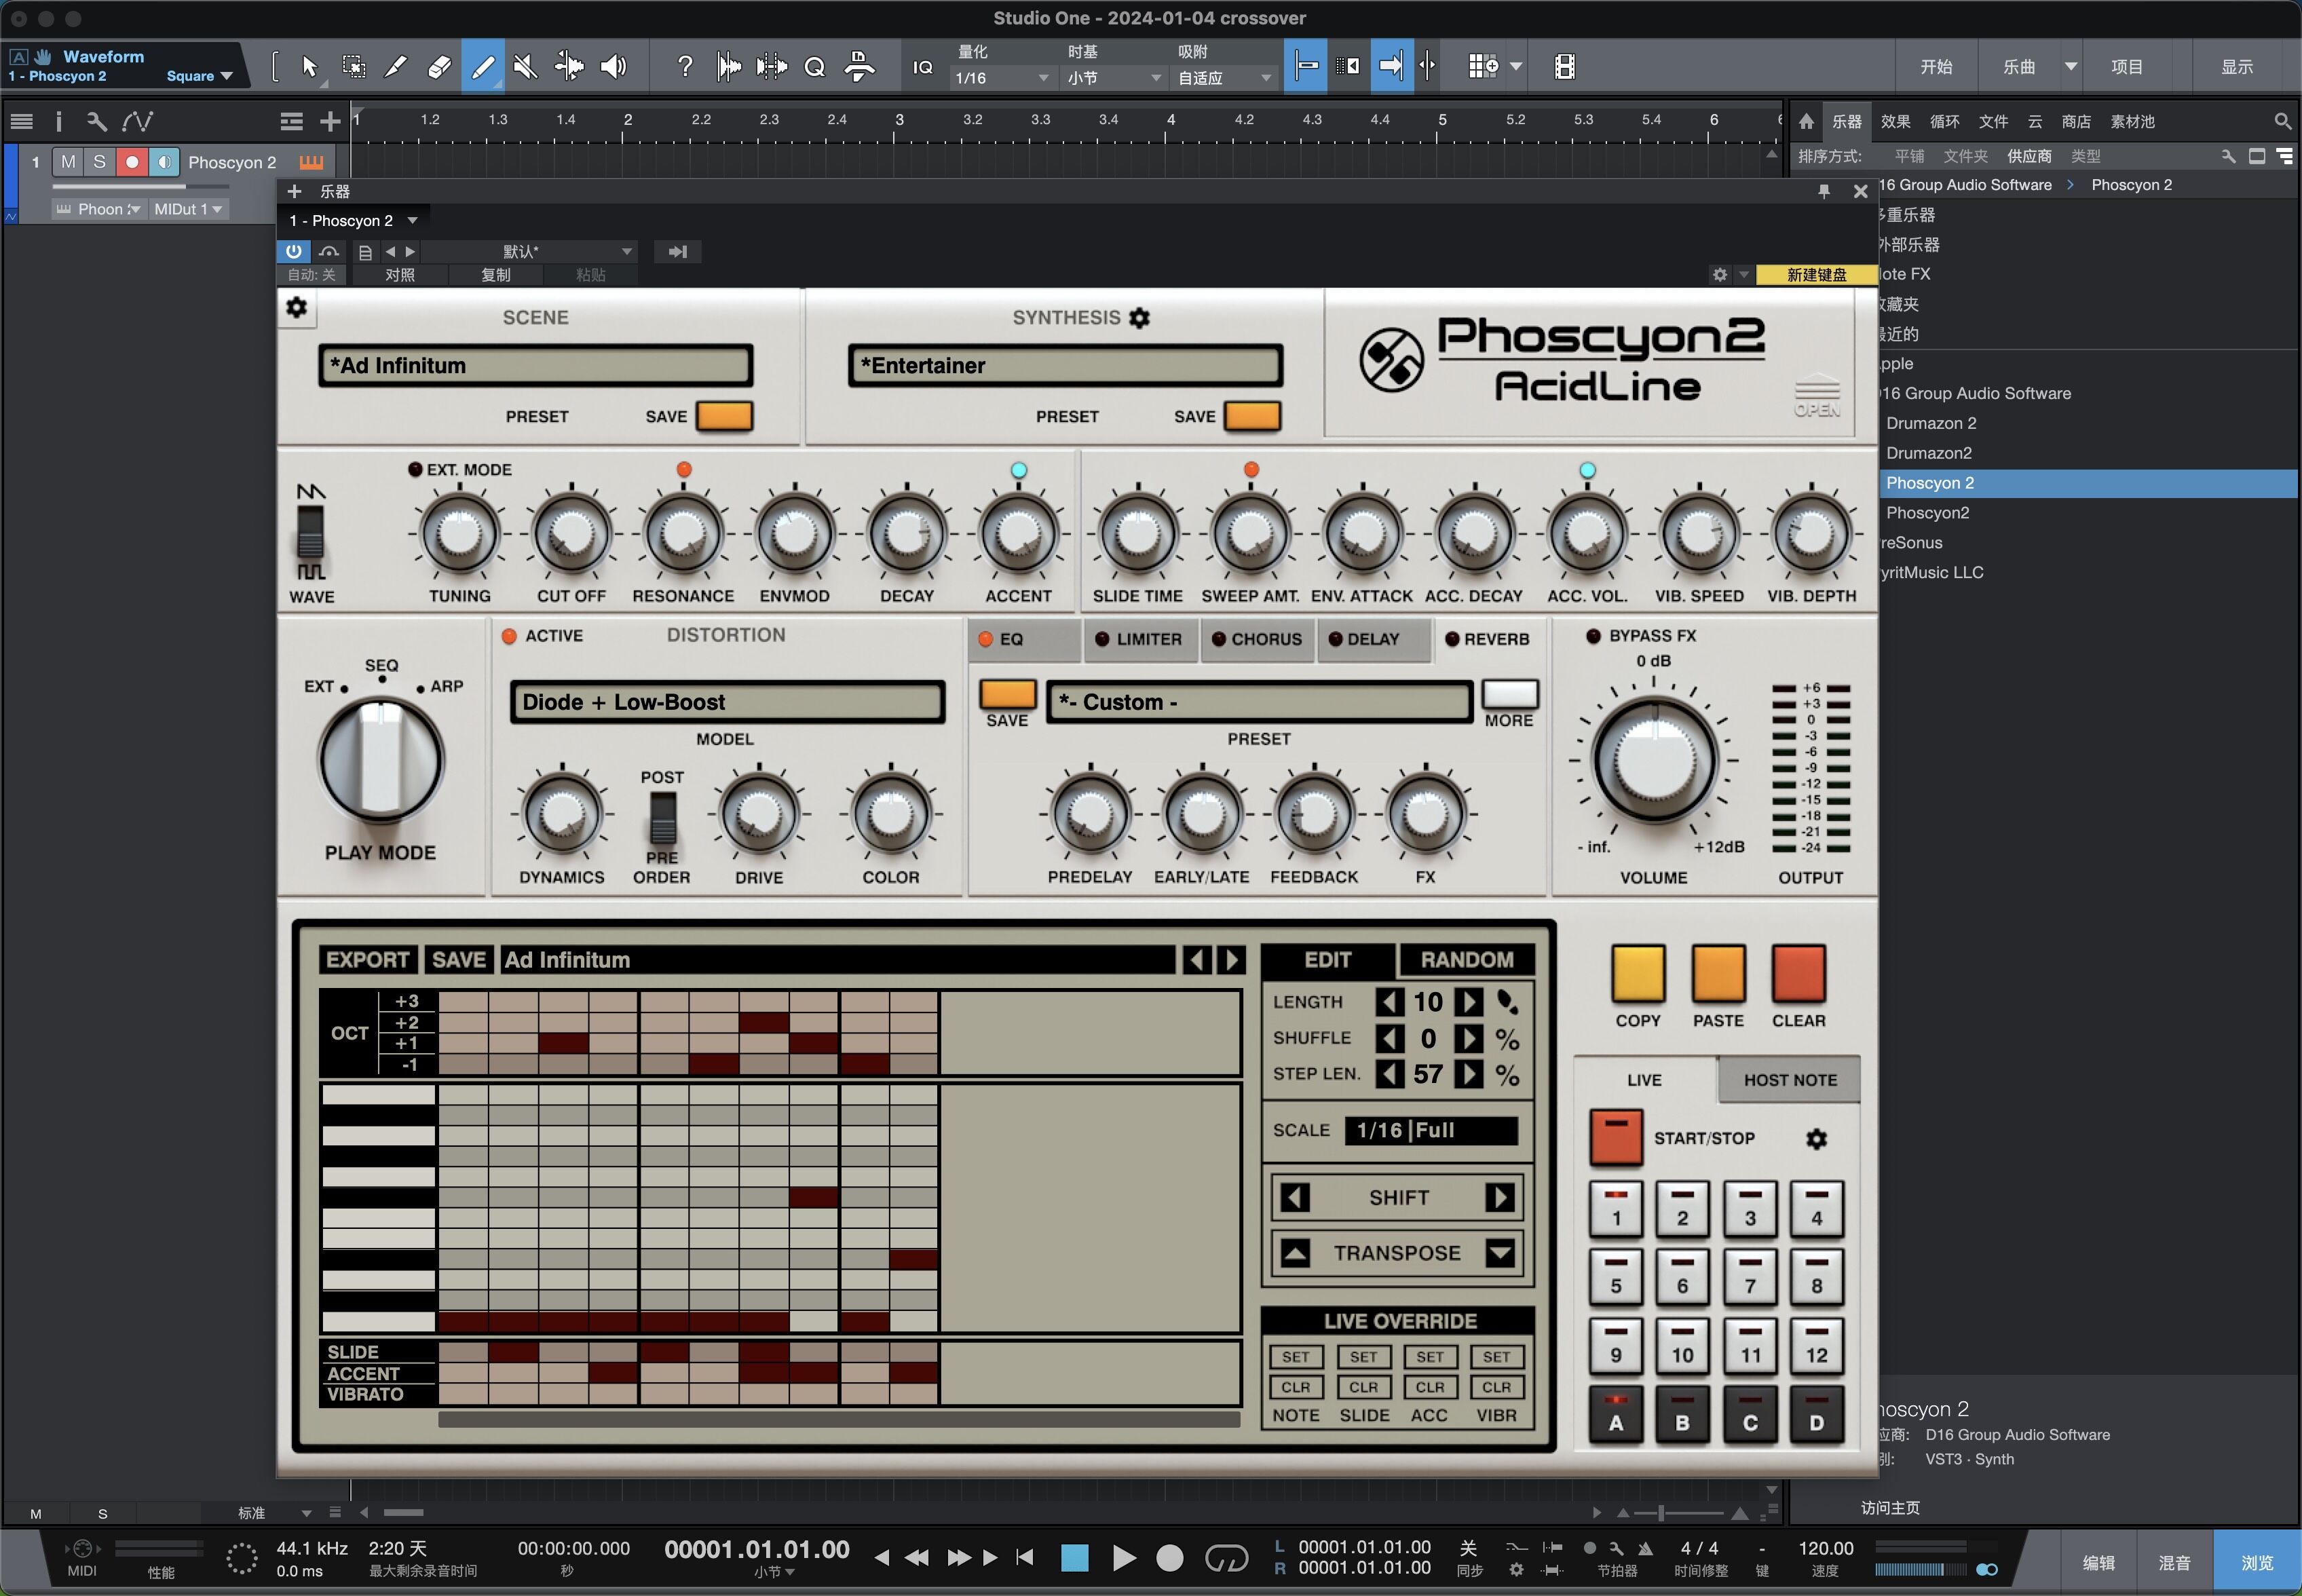 D16 Group Audio Software Phoscyon 2 for Mac(贝斯合成器)v 2.1.0激活版